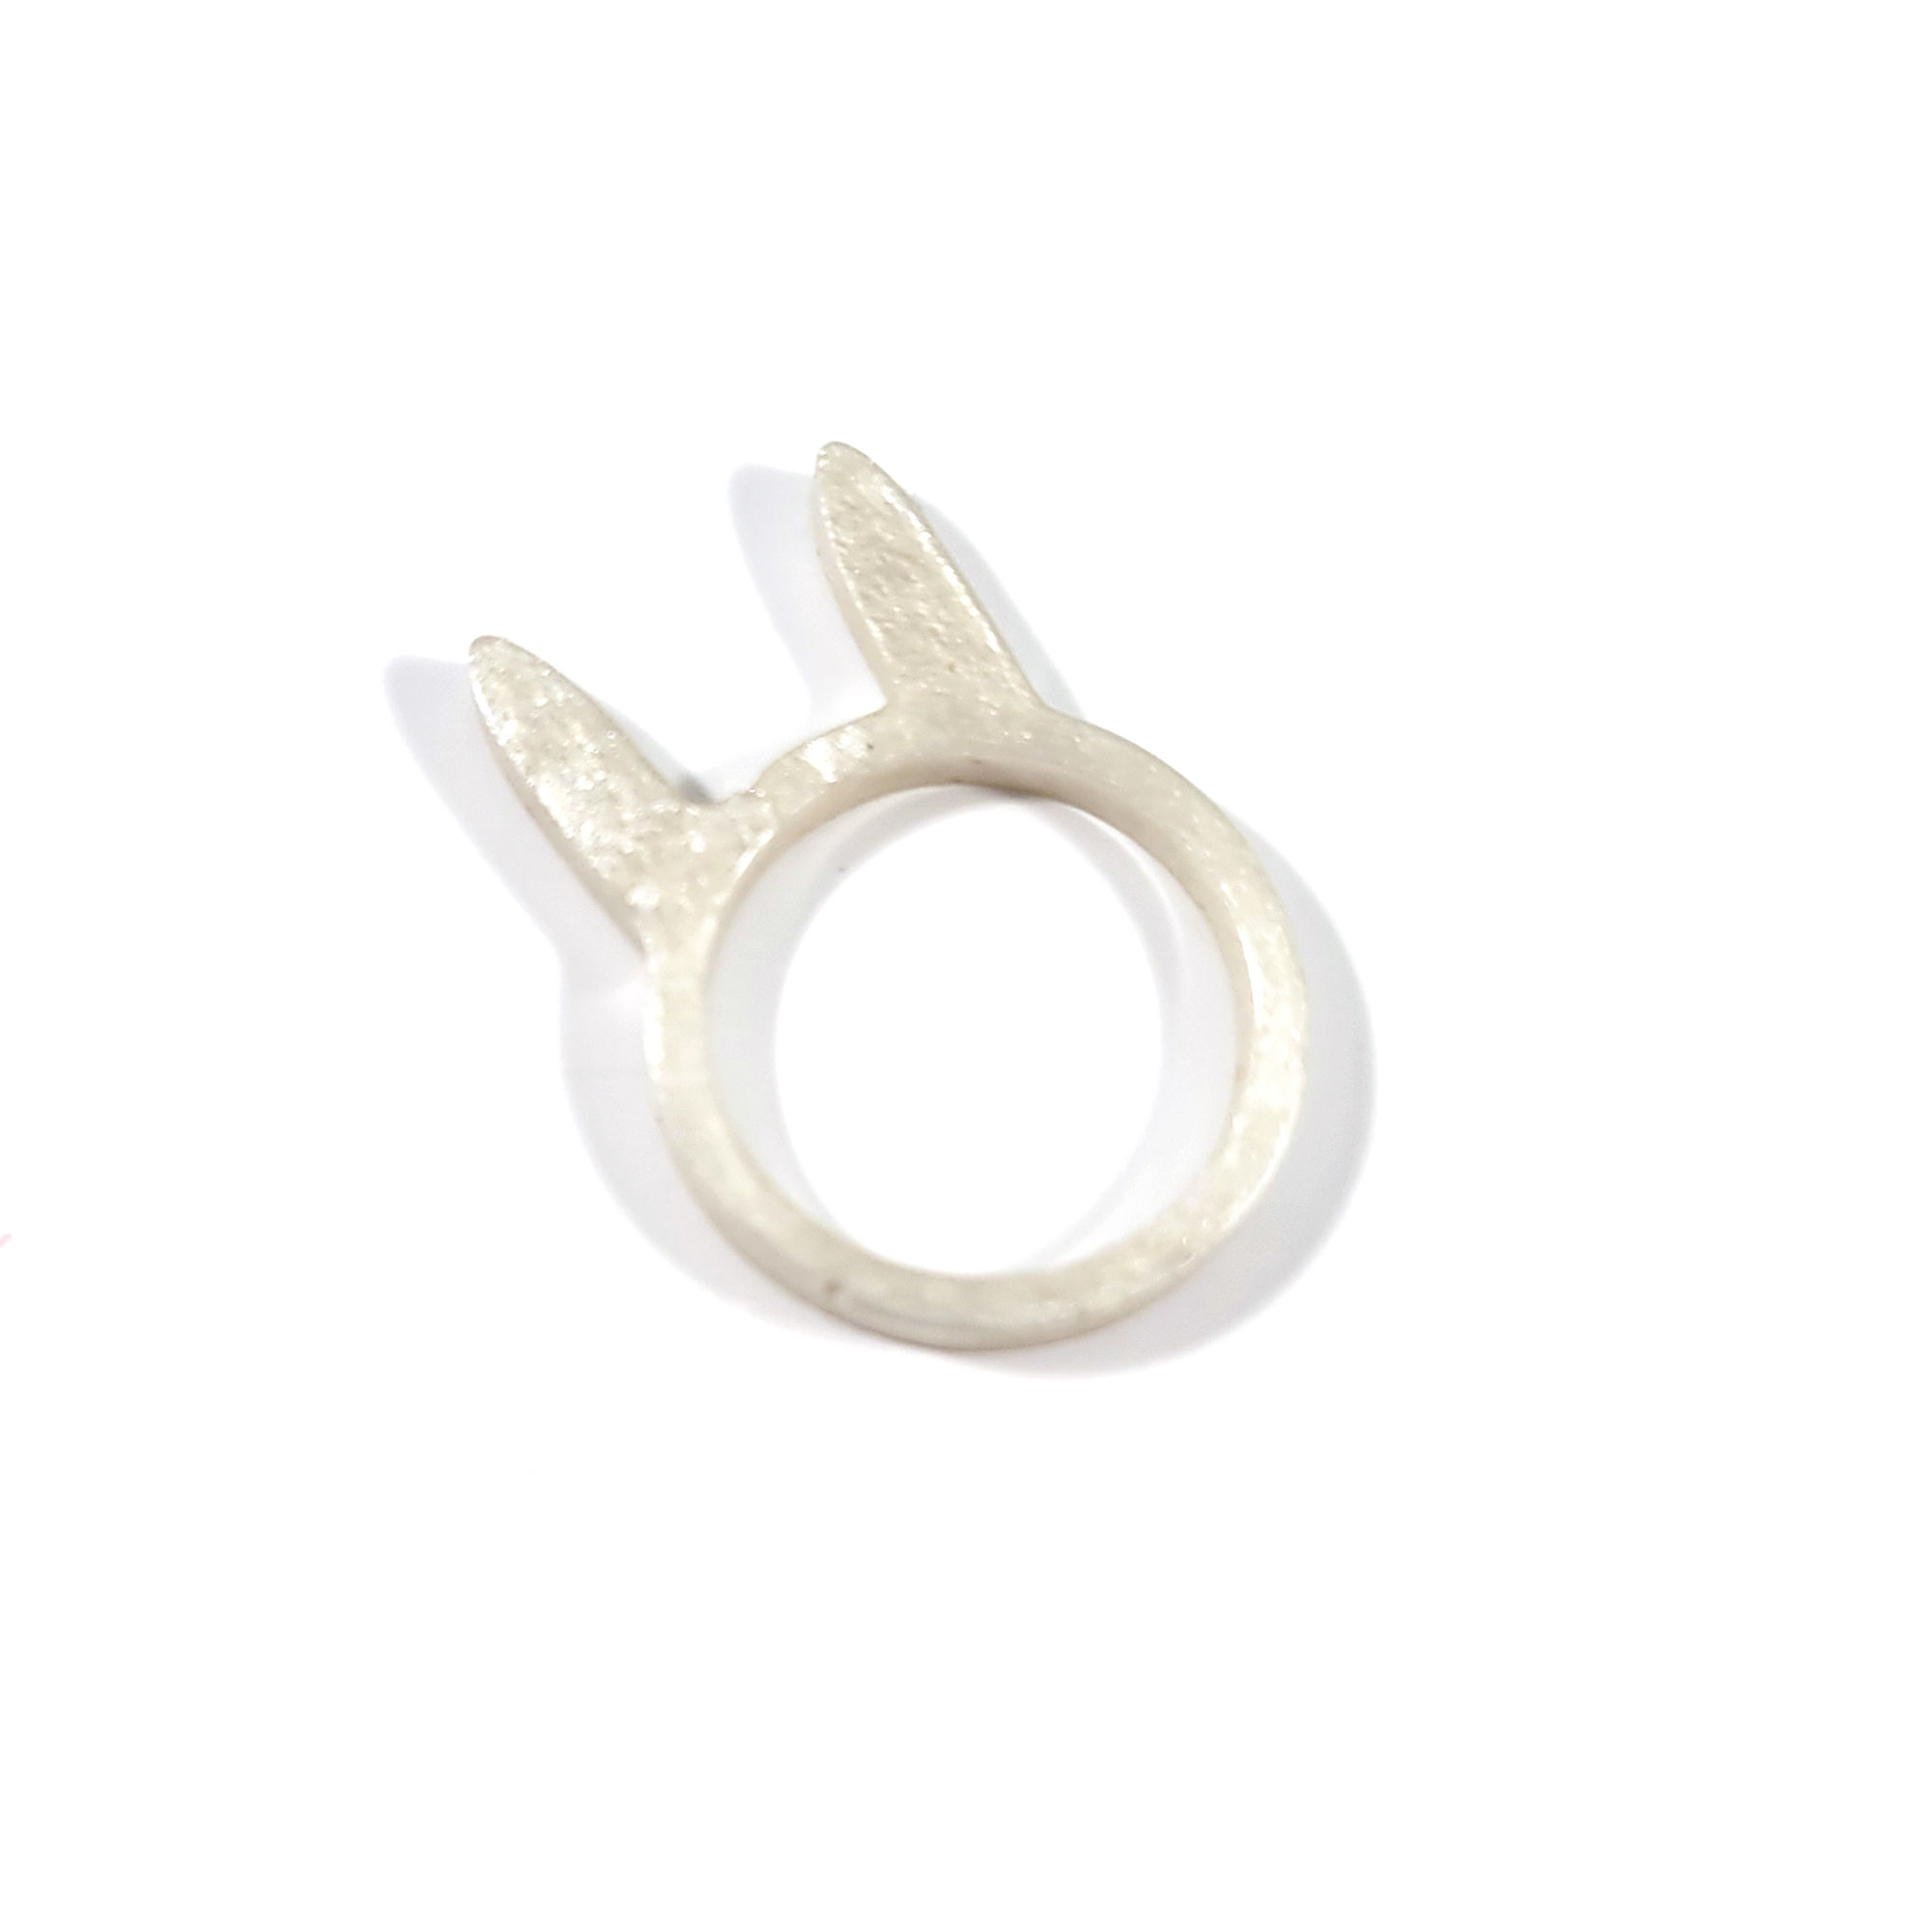 White Rabbit Ring by Wilde Designs